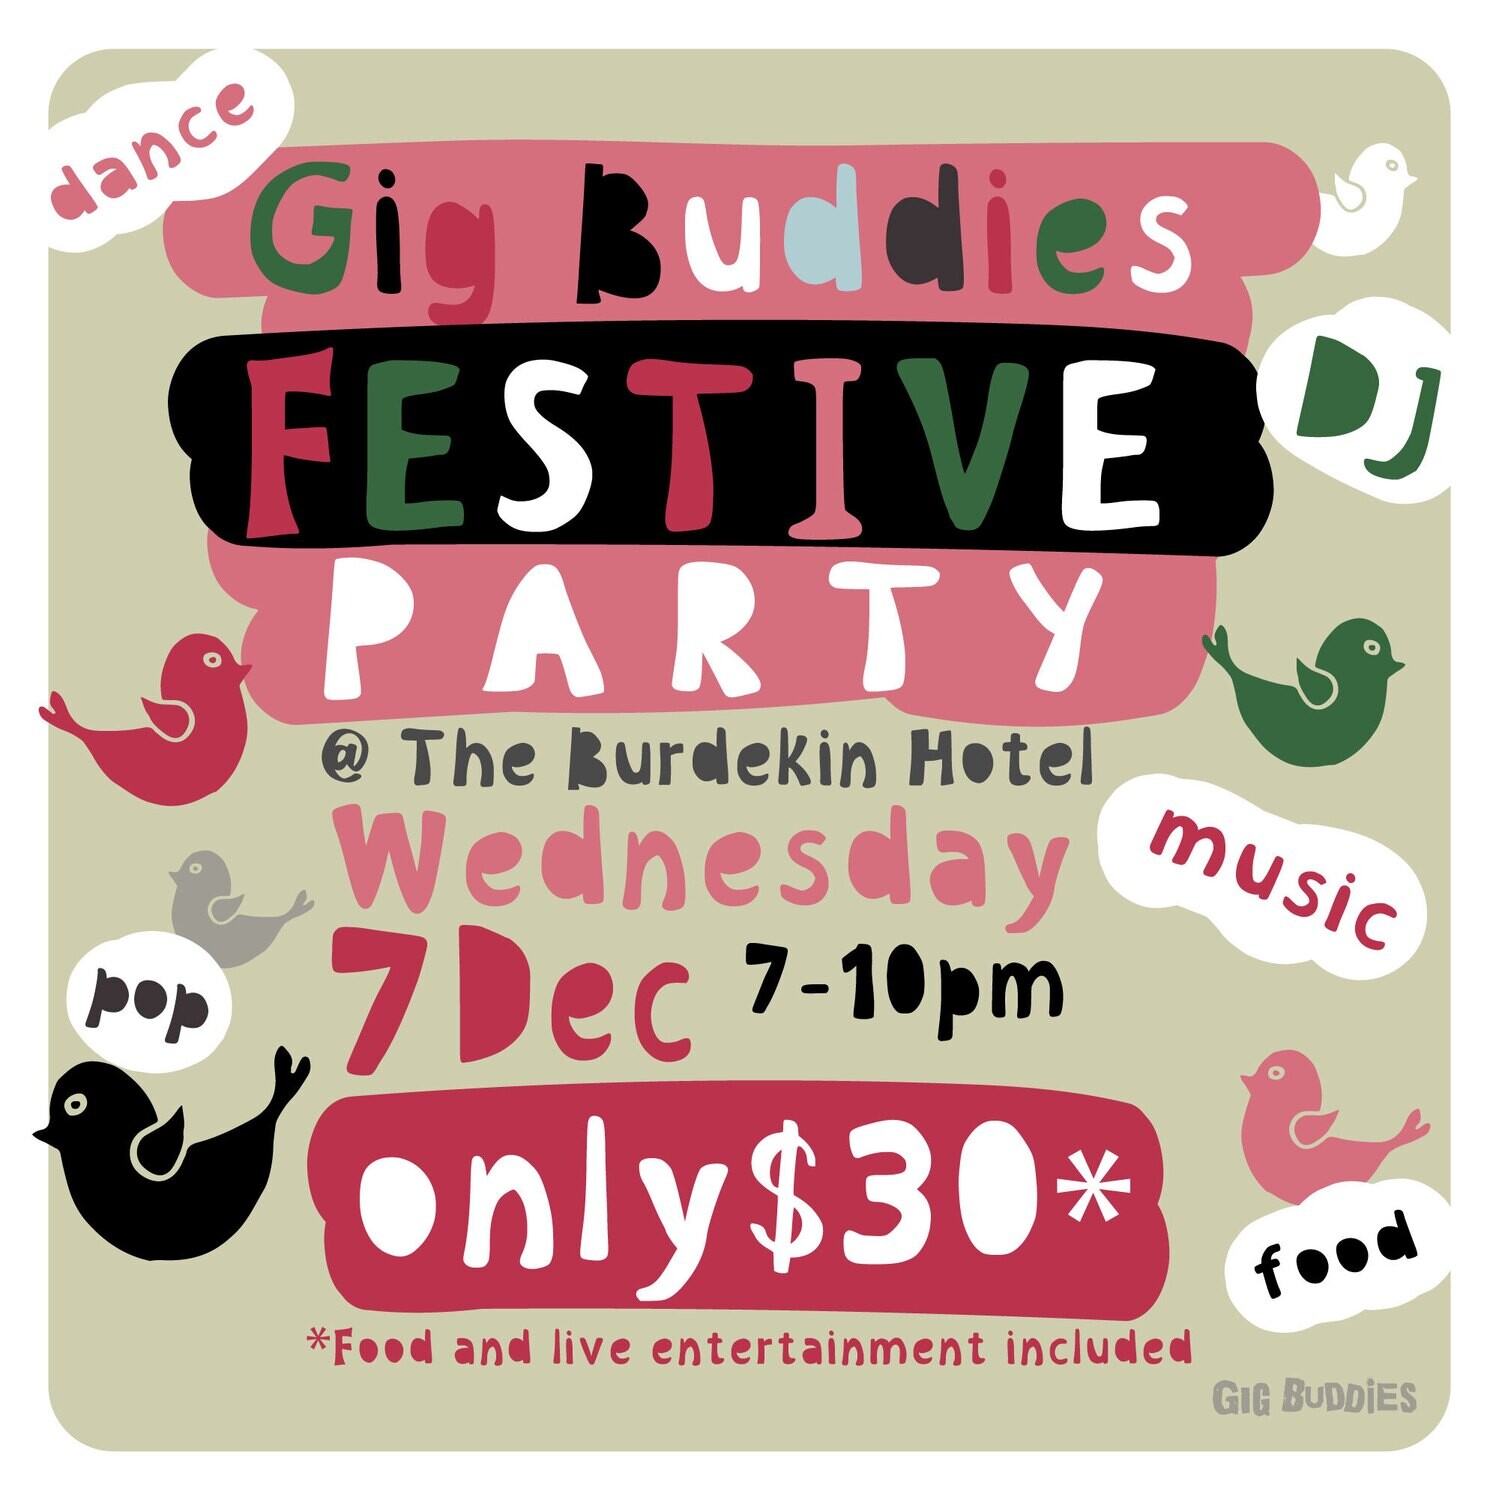 Gig Buddies festive party @ Burdekin Hotel, Sydney CBD - Wednesday 7 December